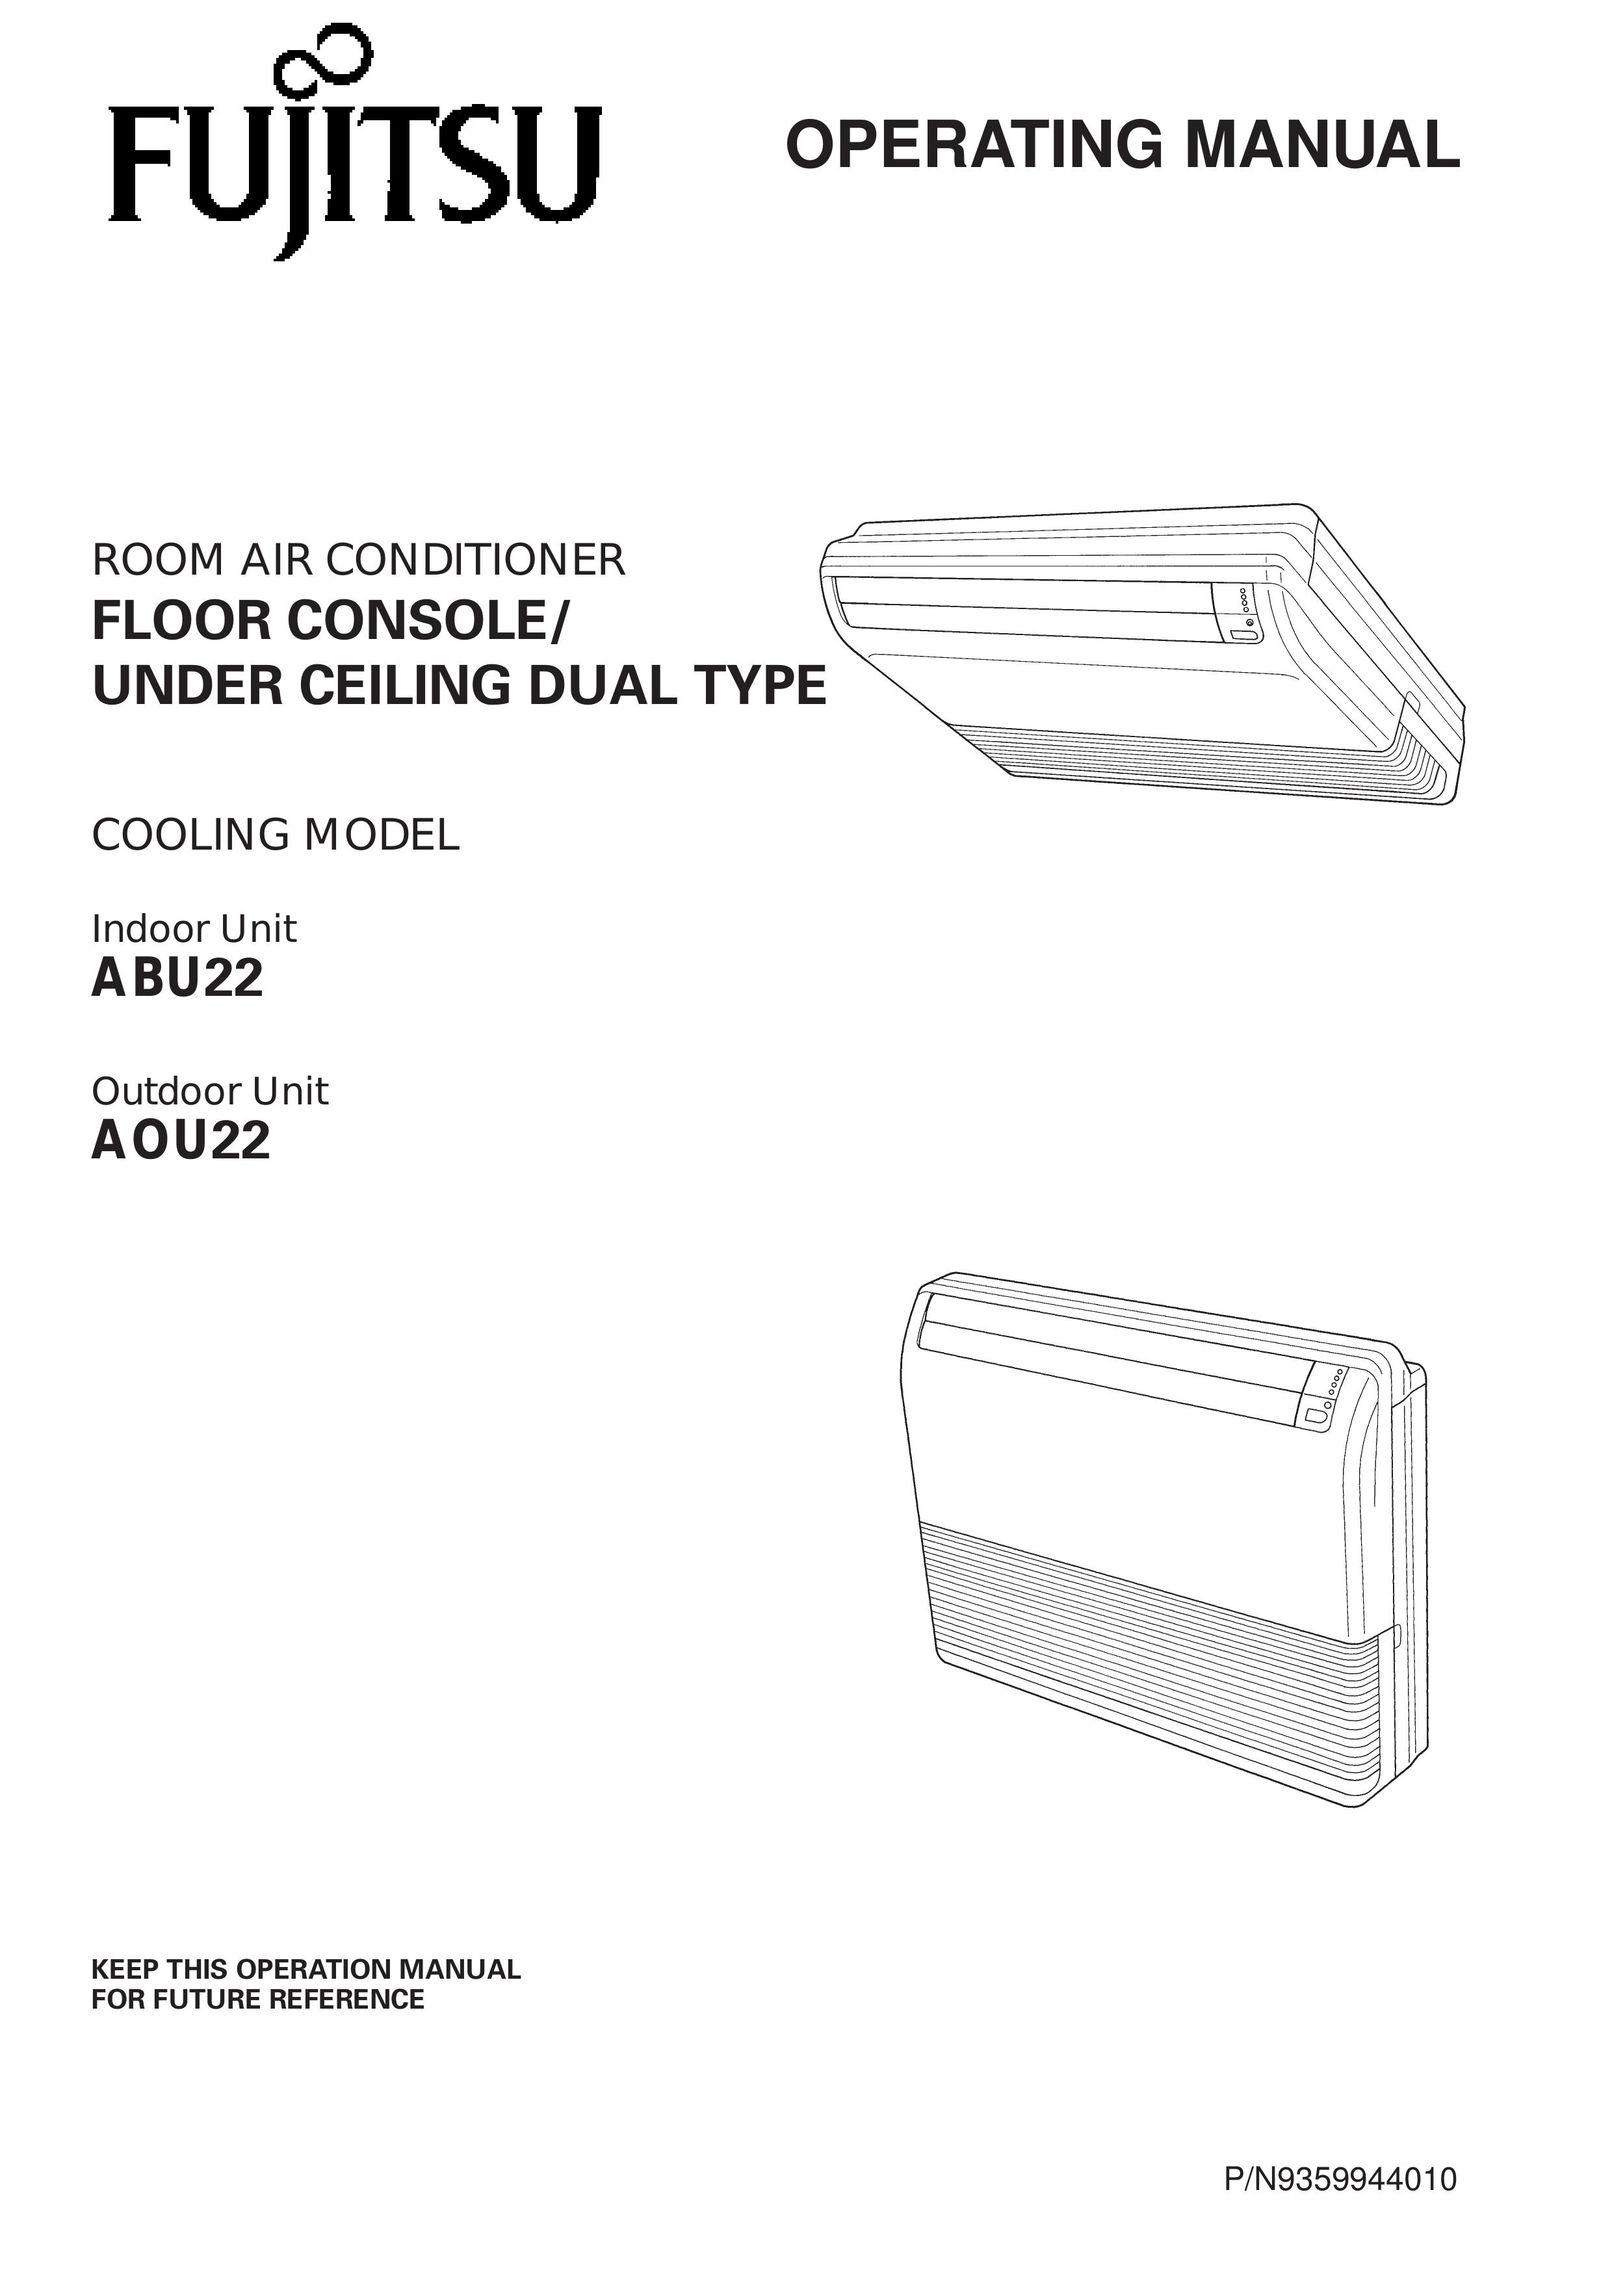 Fujitsu ABO22 Video Game Console User Manual